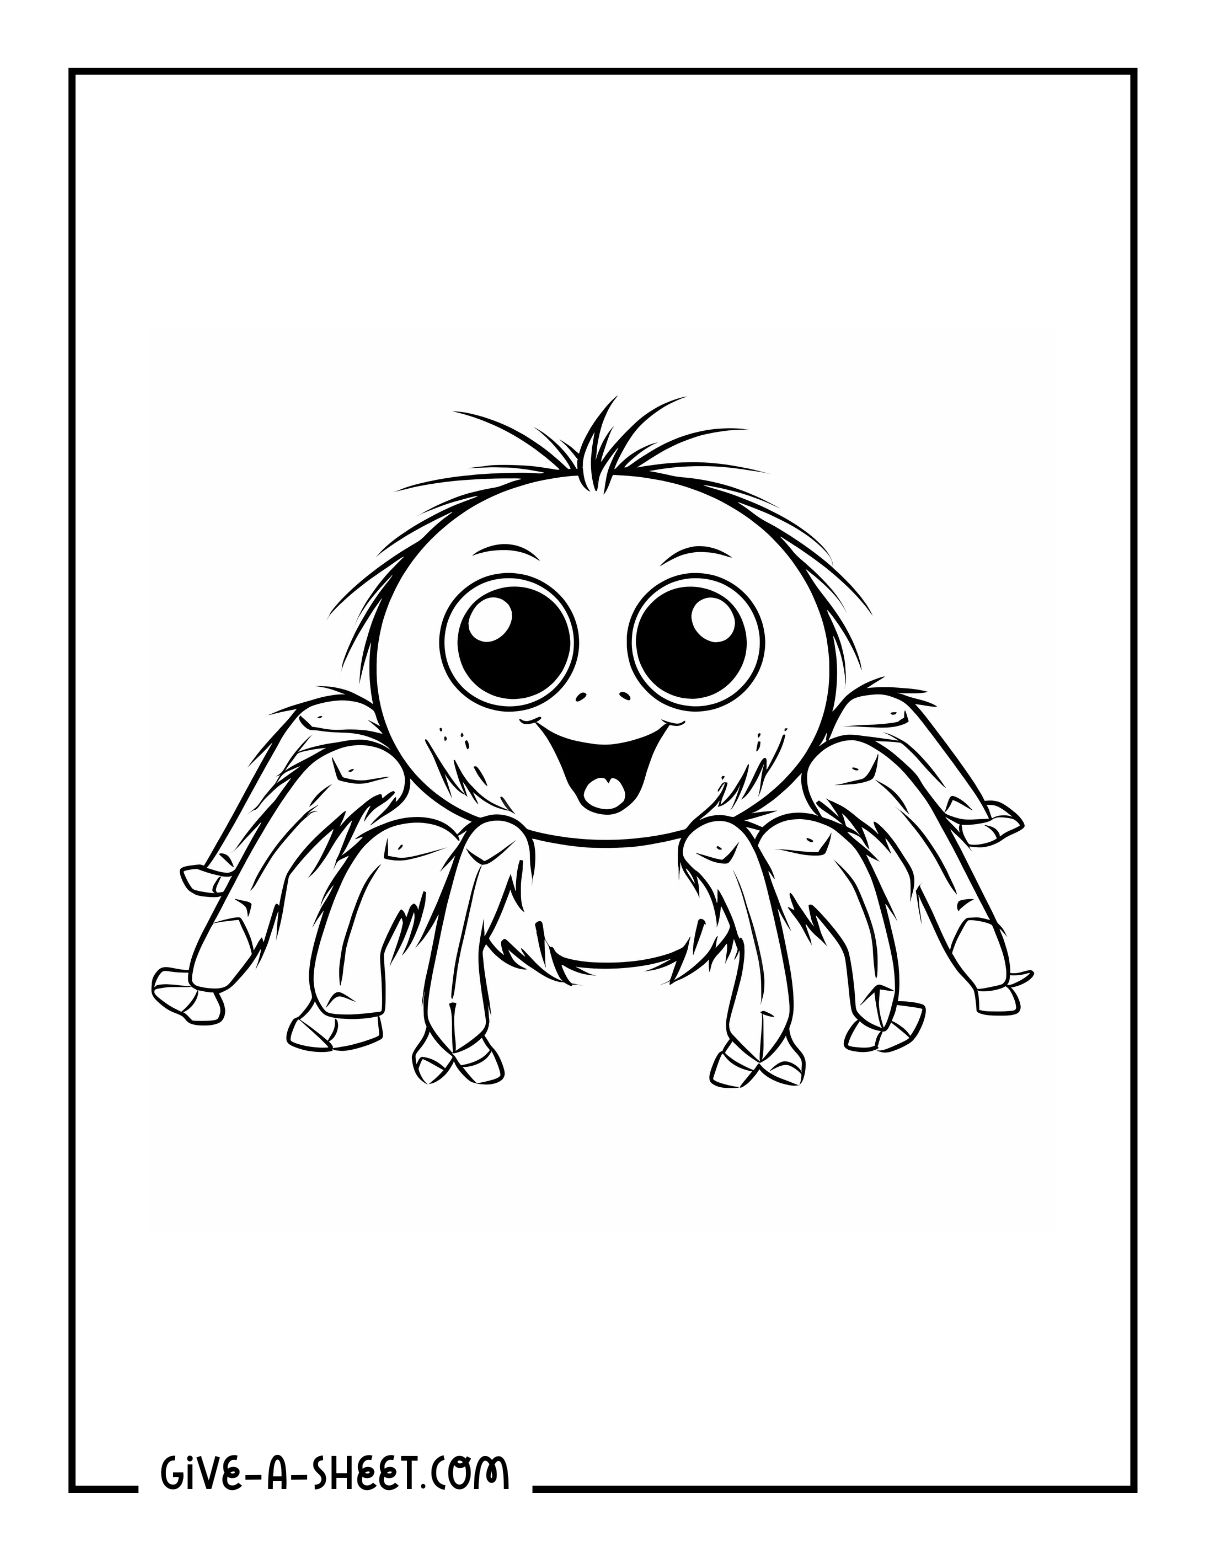 Kawaii baby tarantula coloring sheet for kids.